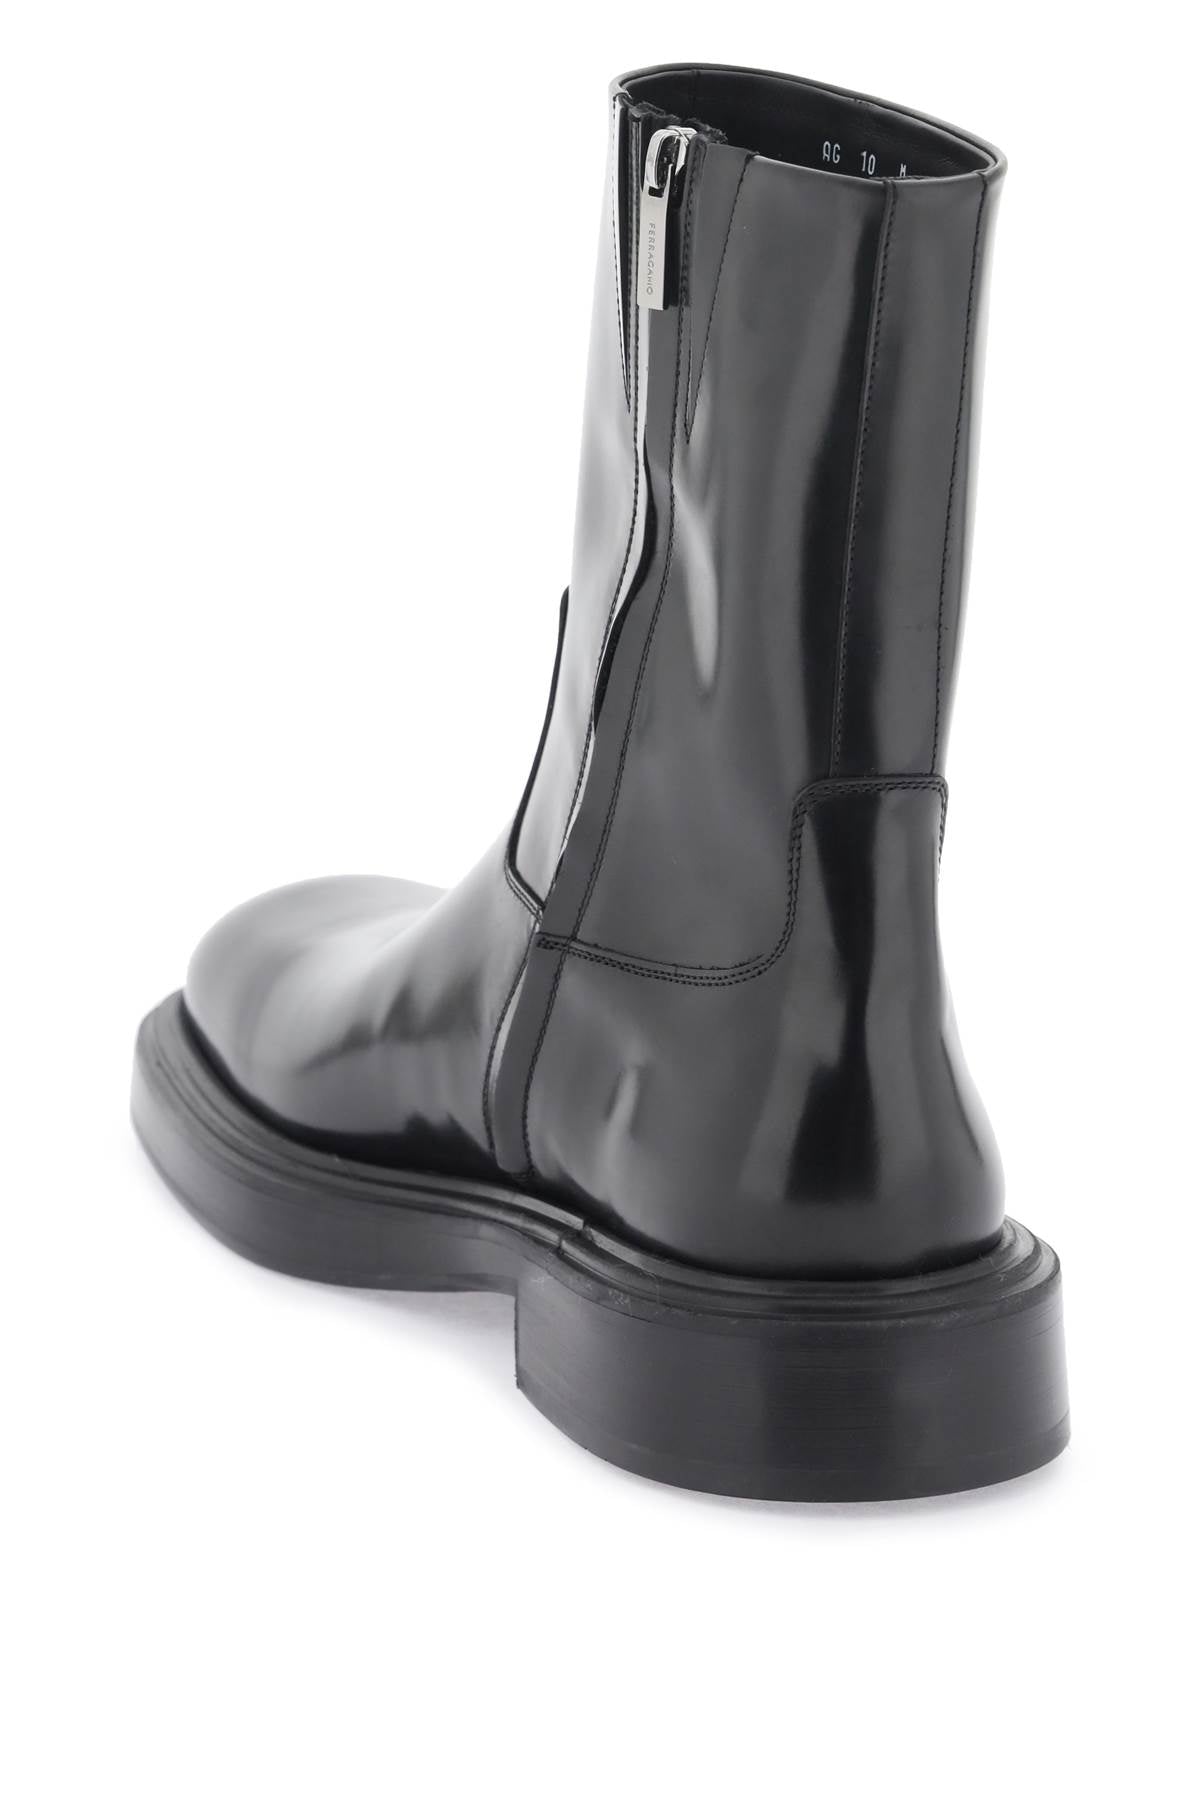 FERRAGAMO Men's Black Leather Ankle Boots with Side Zipper Closure